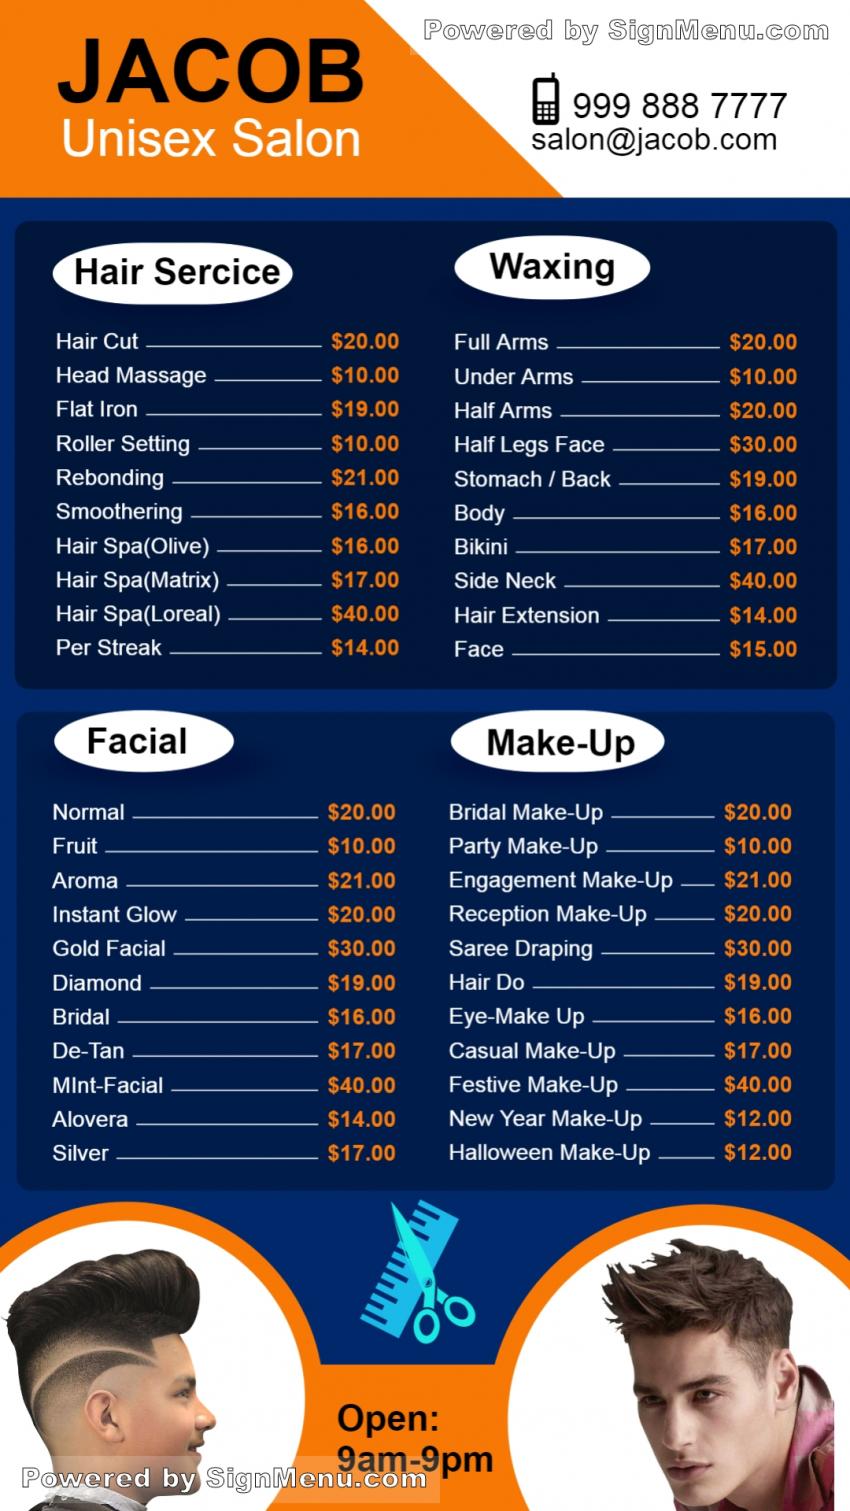 Signmenu : Digital signage template of salon services